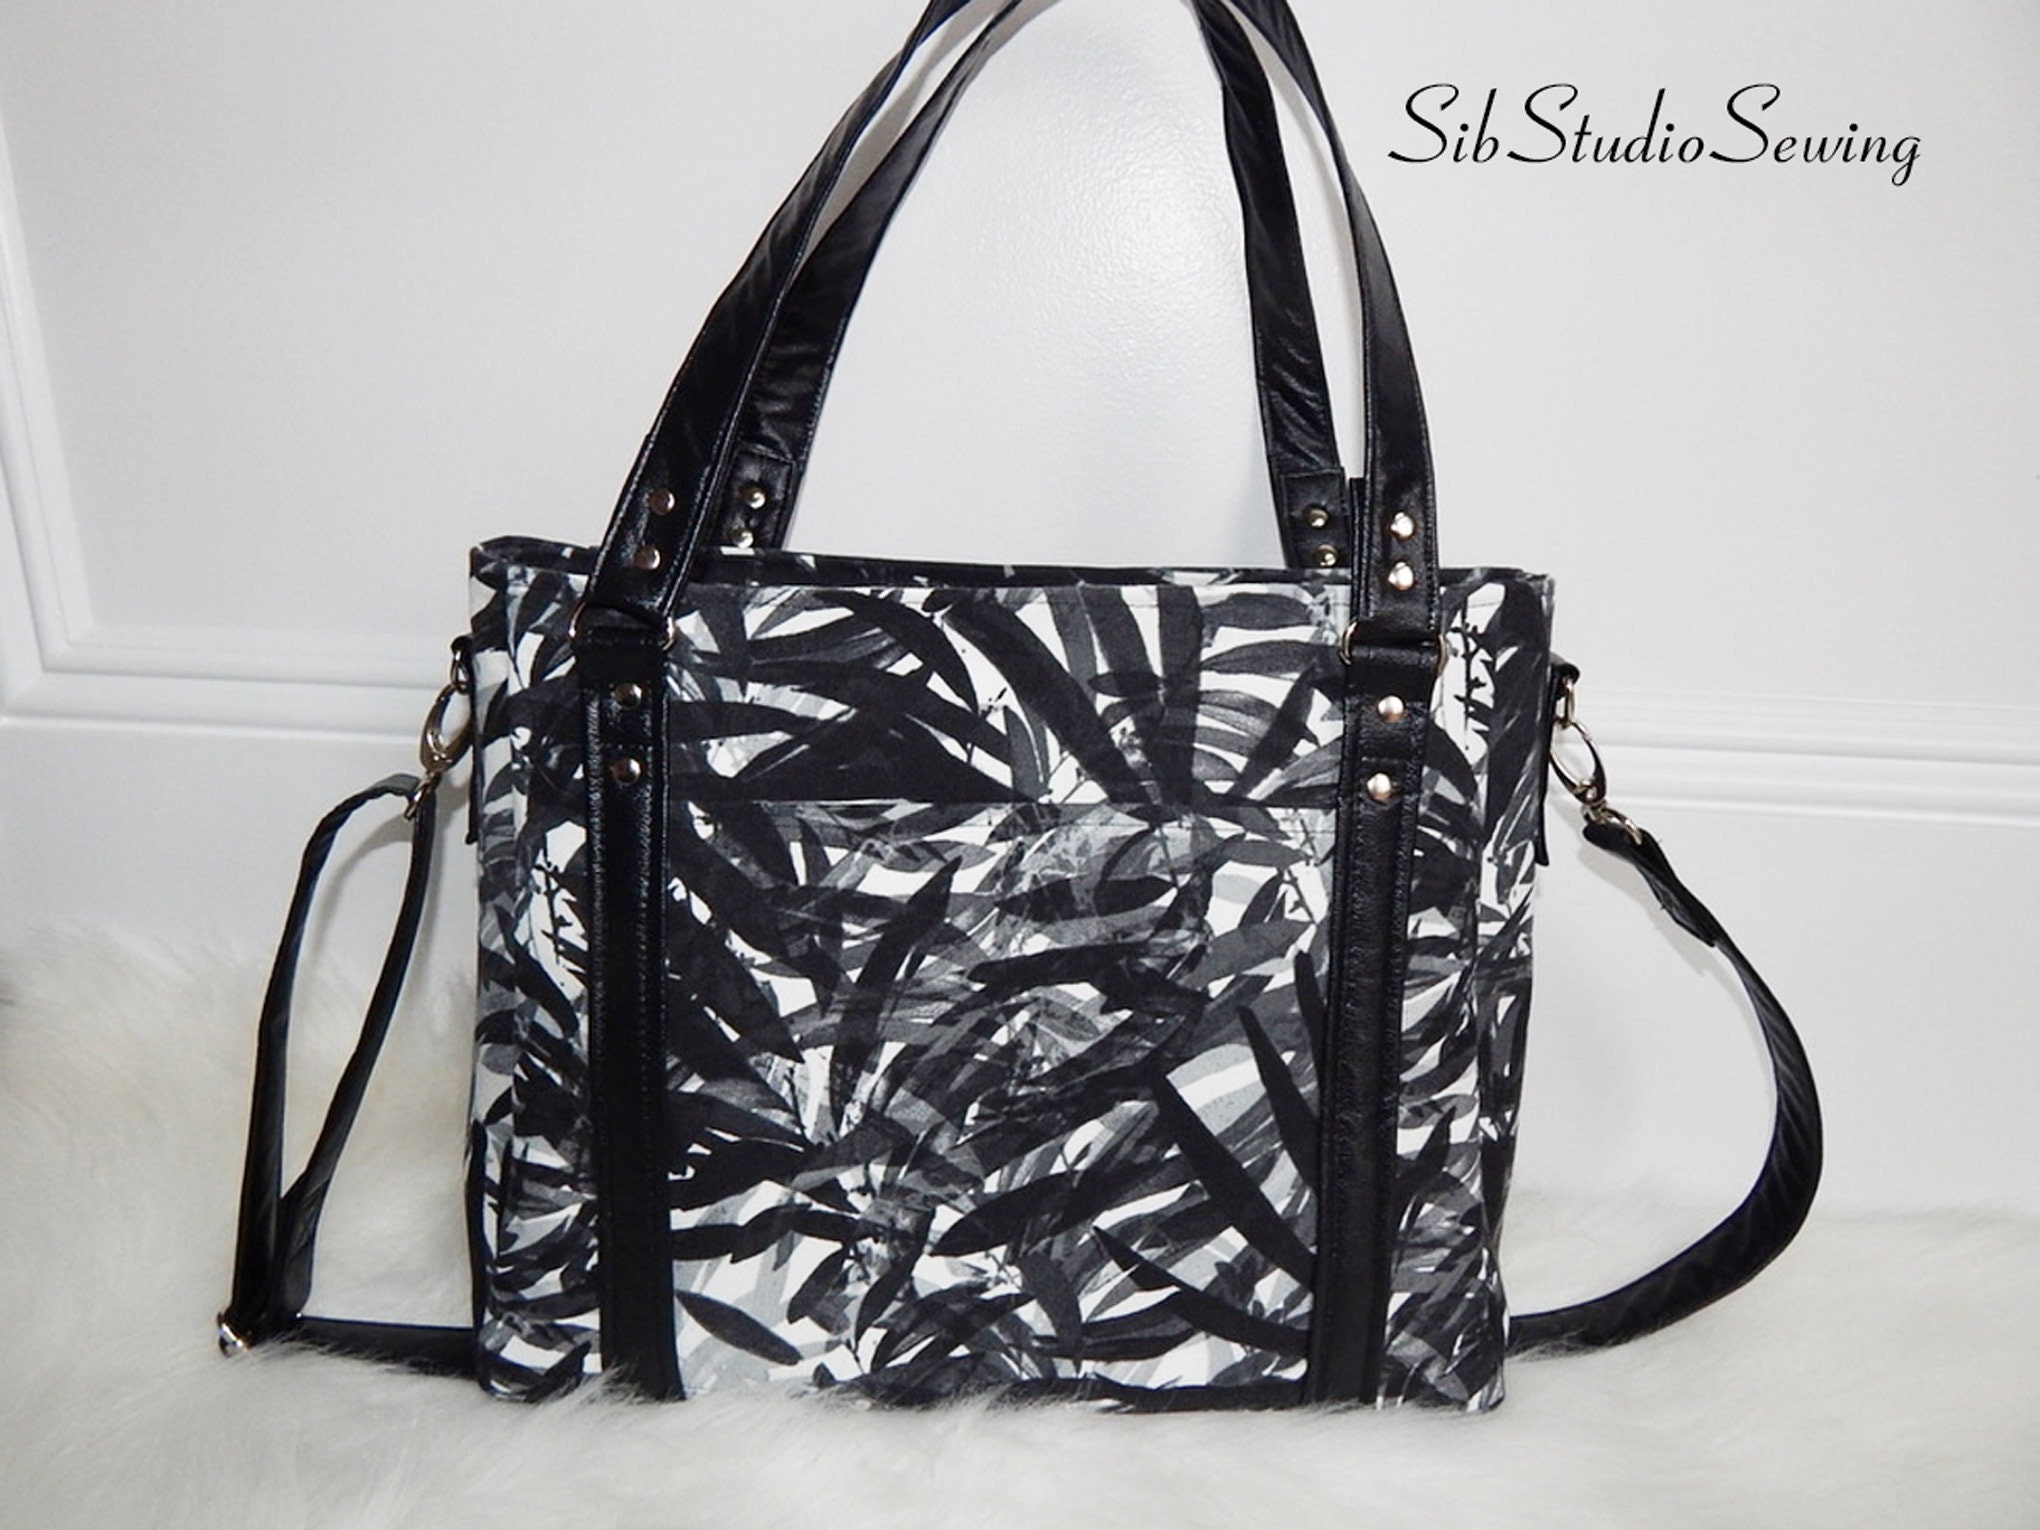 Stylish Black Leather Tote Bag